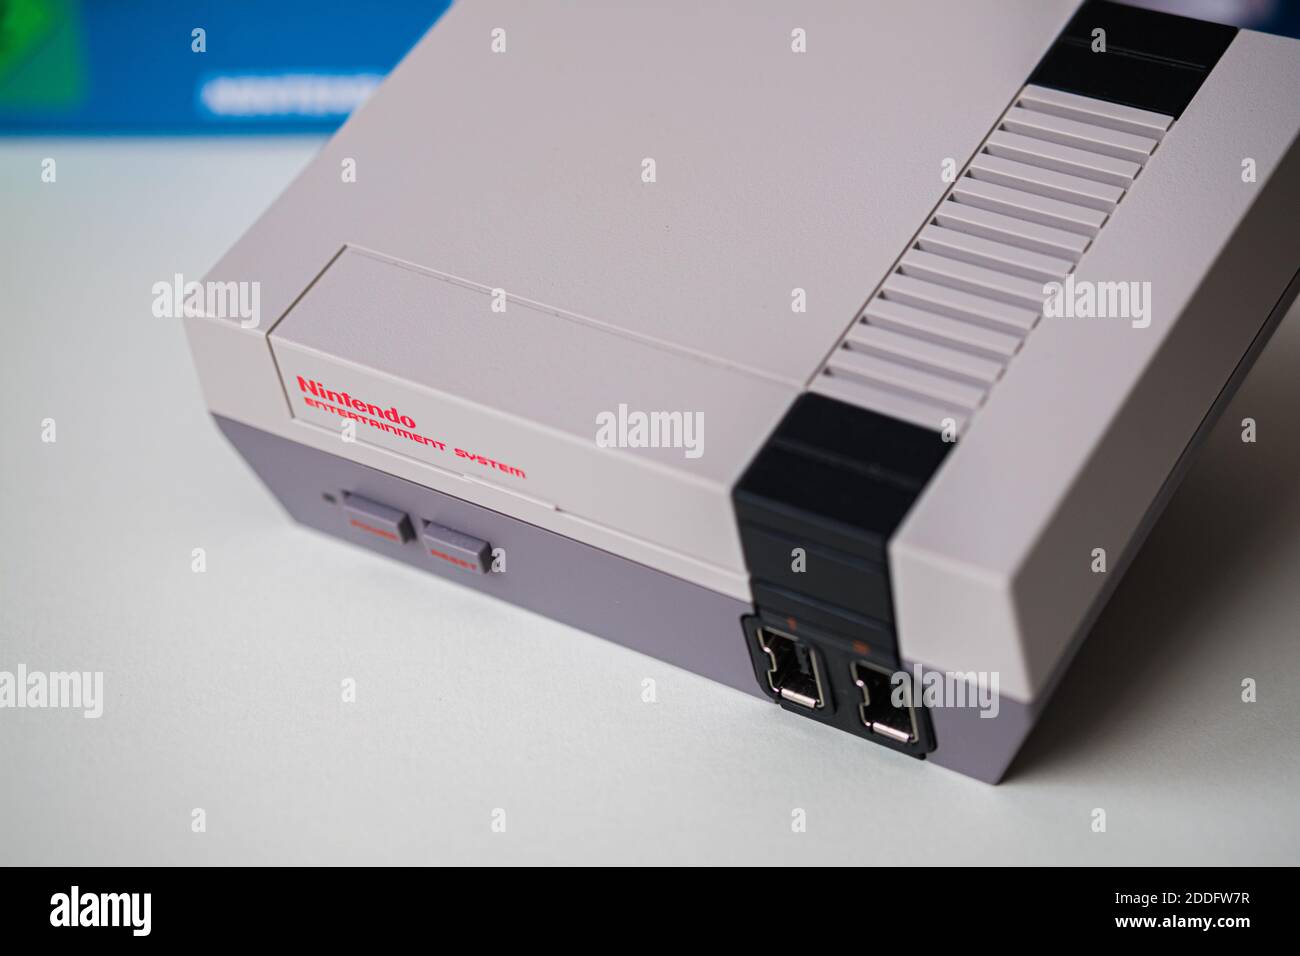 NES Classic Edition Retro Portable Console – Nintendo Entertainment System Stock Photo